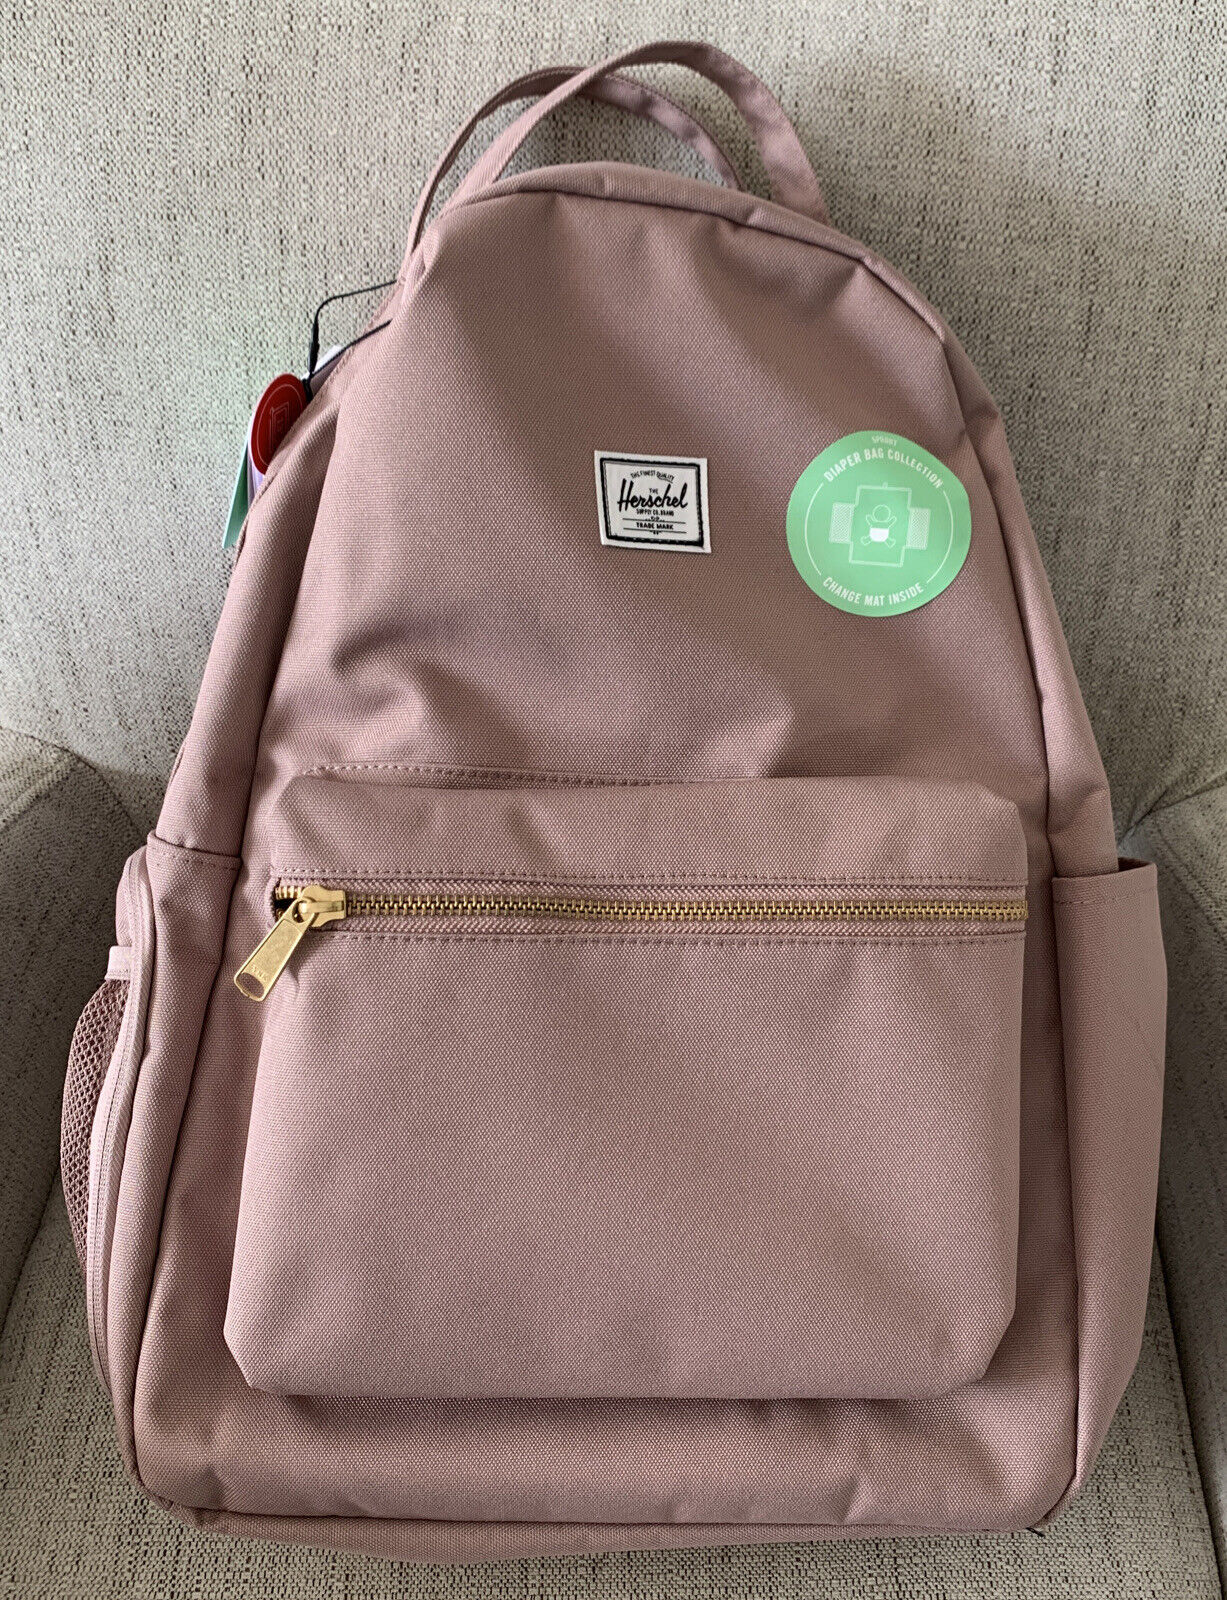 Herschel Nova Sprout Diaper Bag Backpack Changing Pad Rose Baby Shower Gift